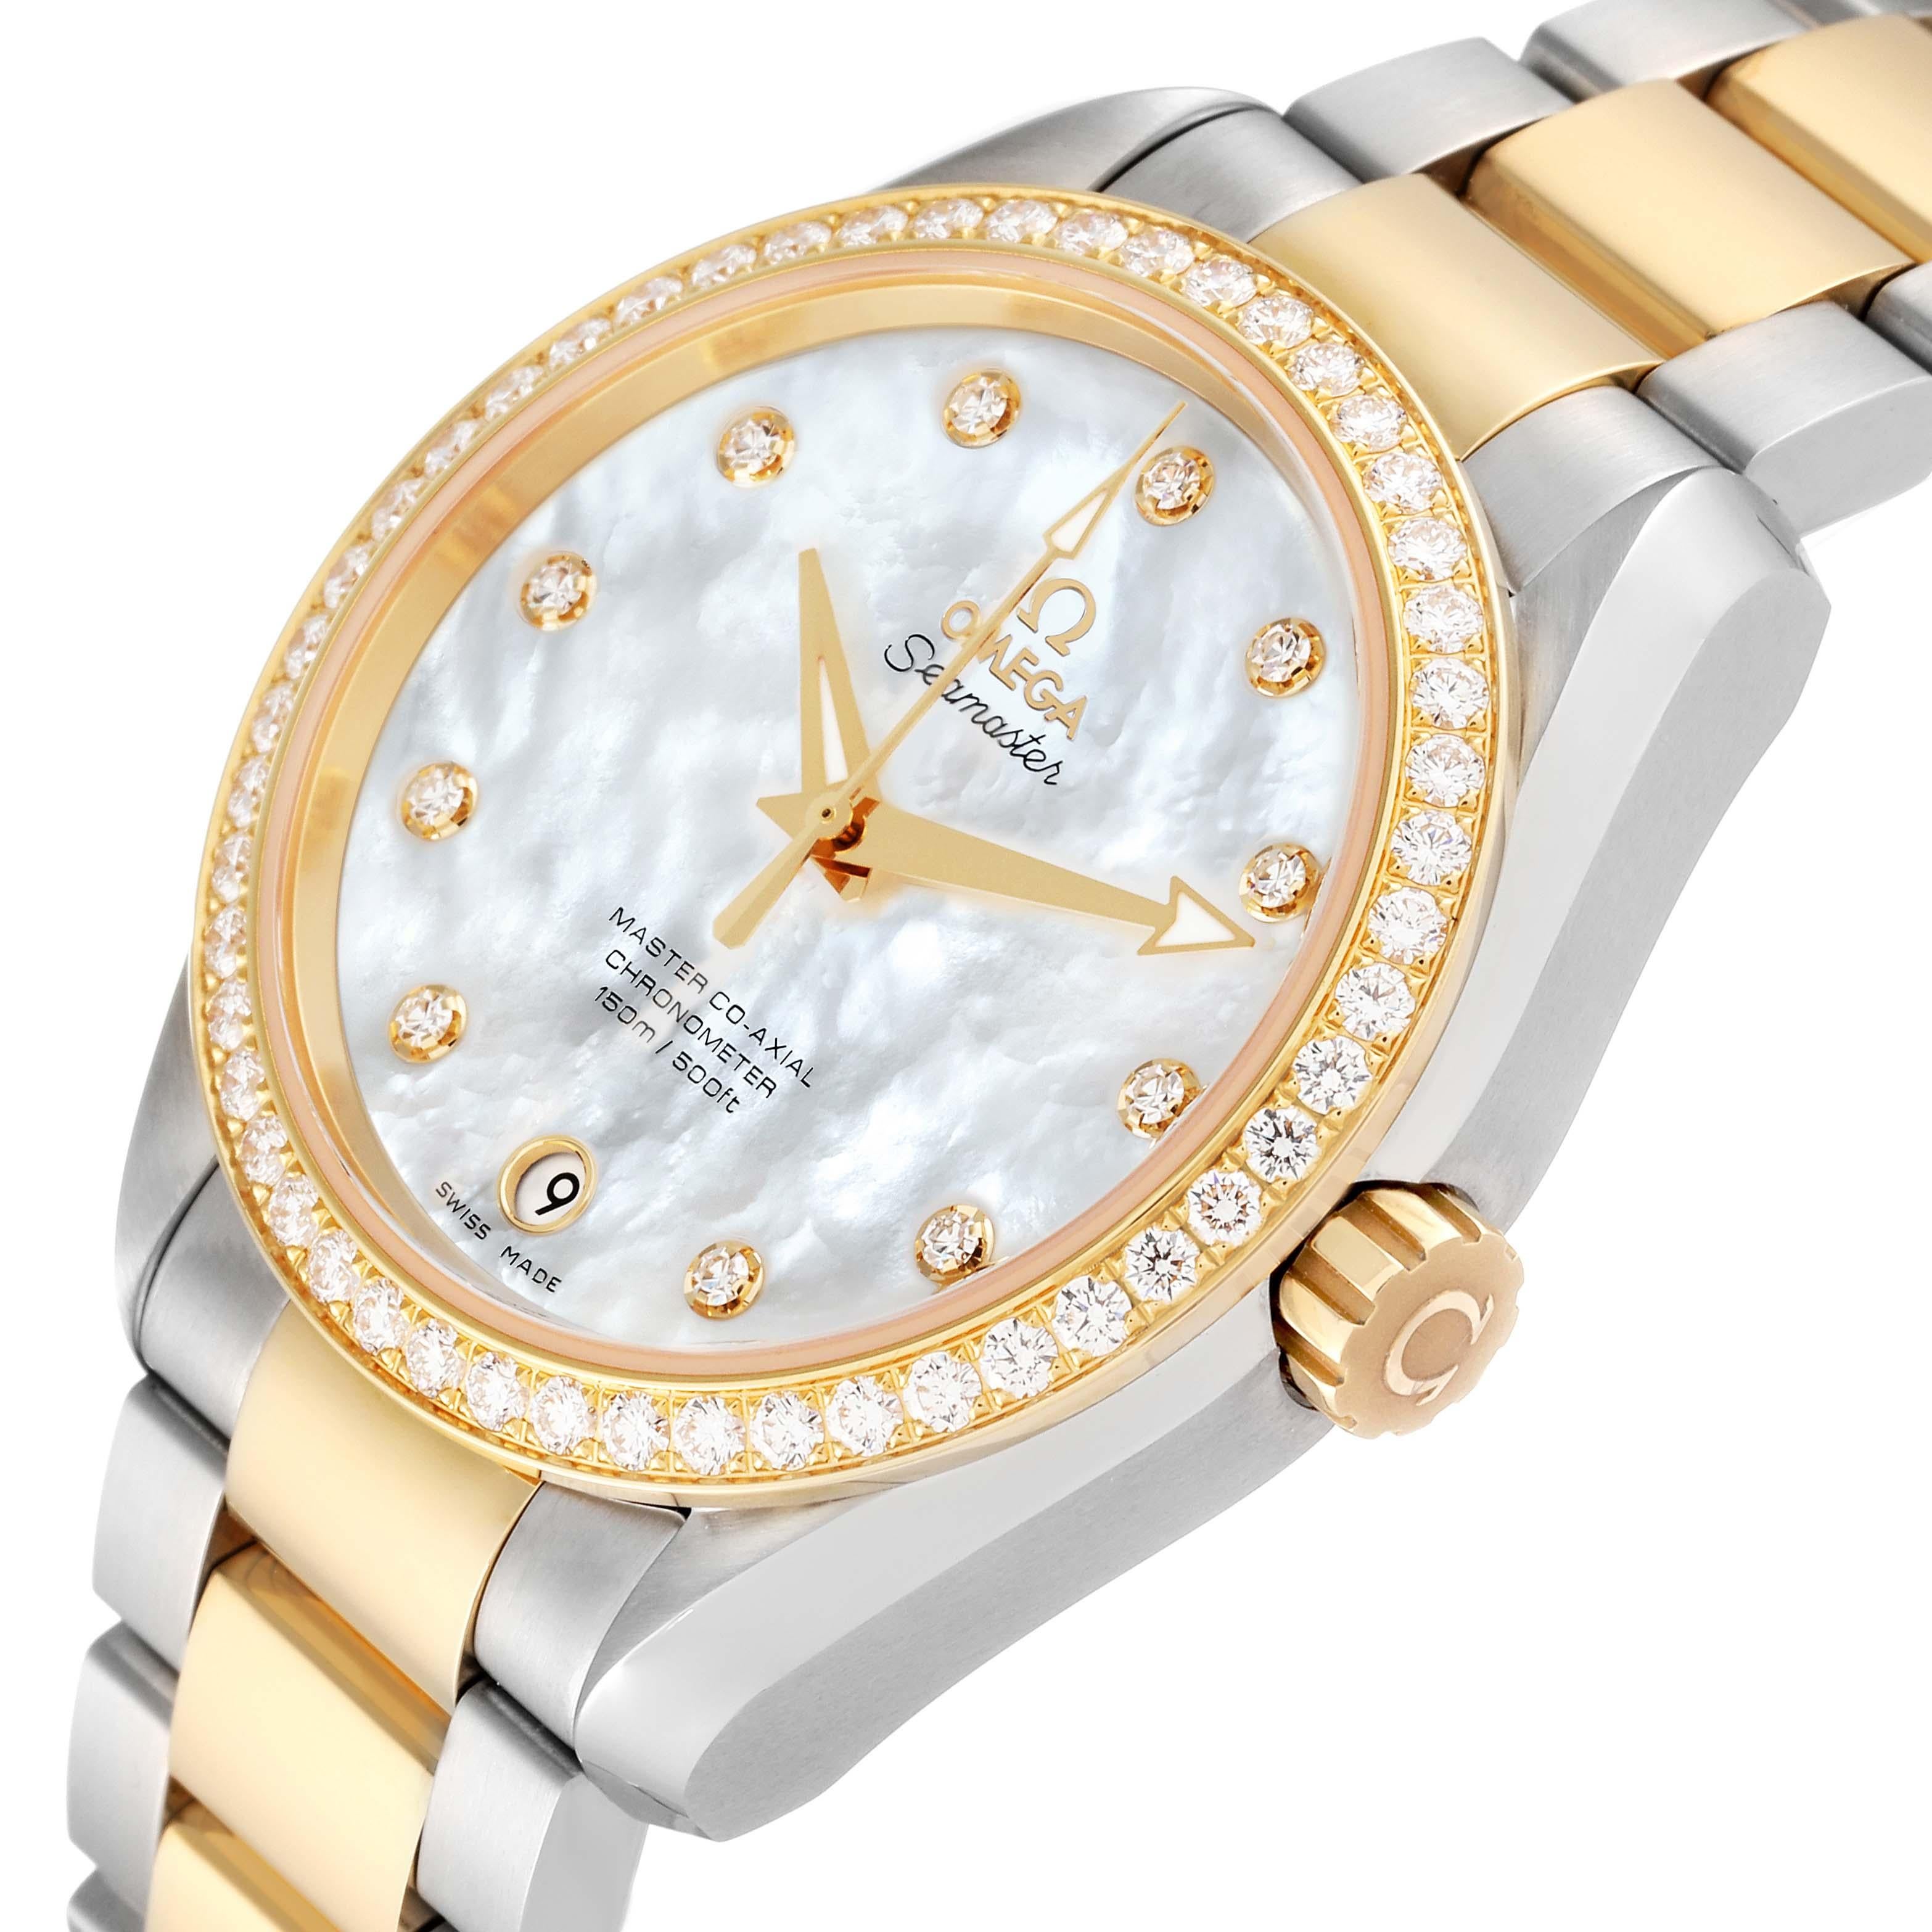 Omega Aqua Terra Steel Yellow Gold Diamond Watch 231.25.39.21.55.002 Unworn 1